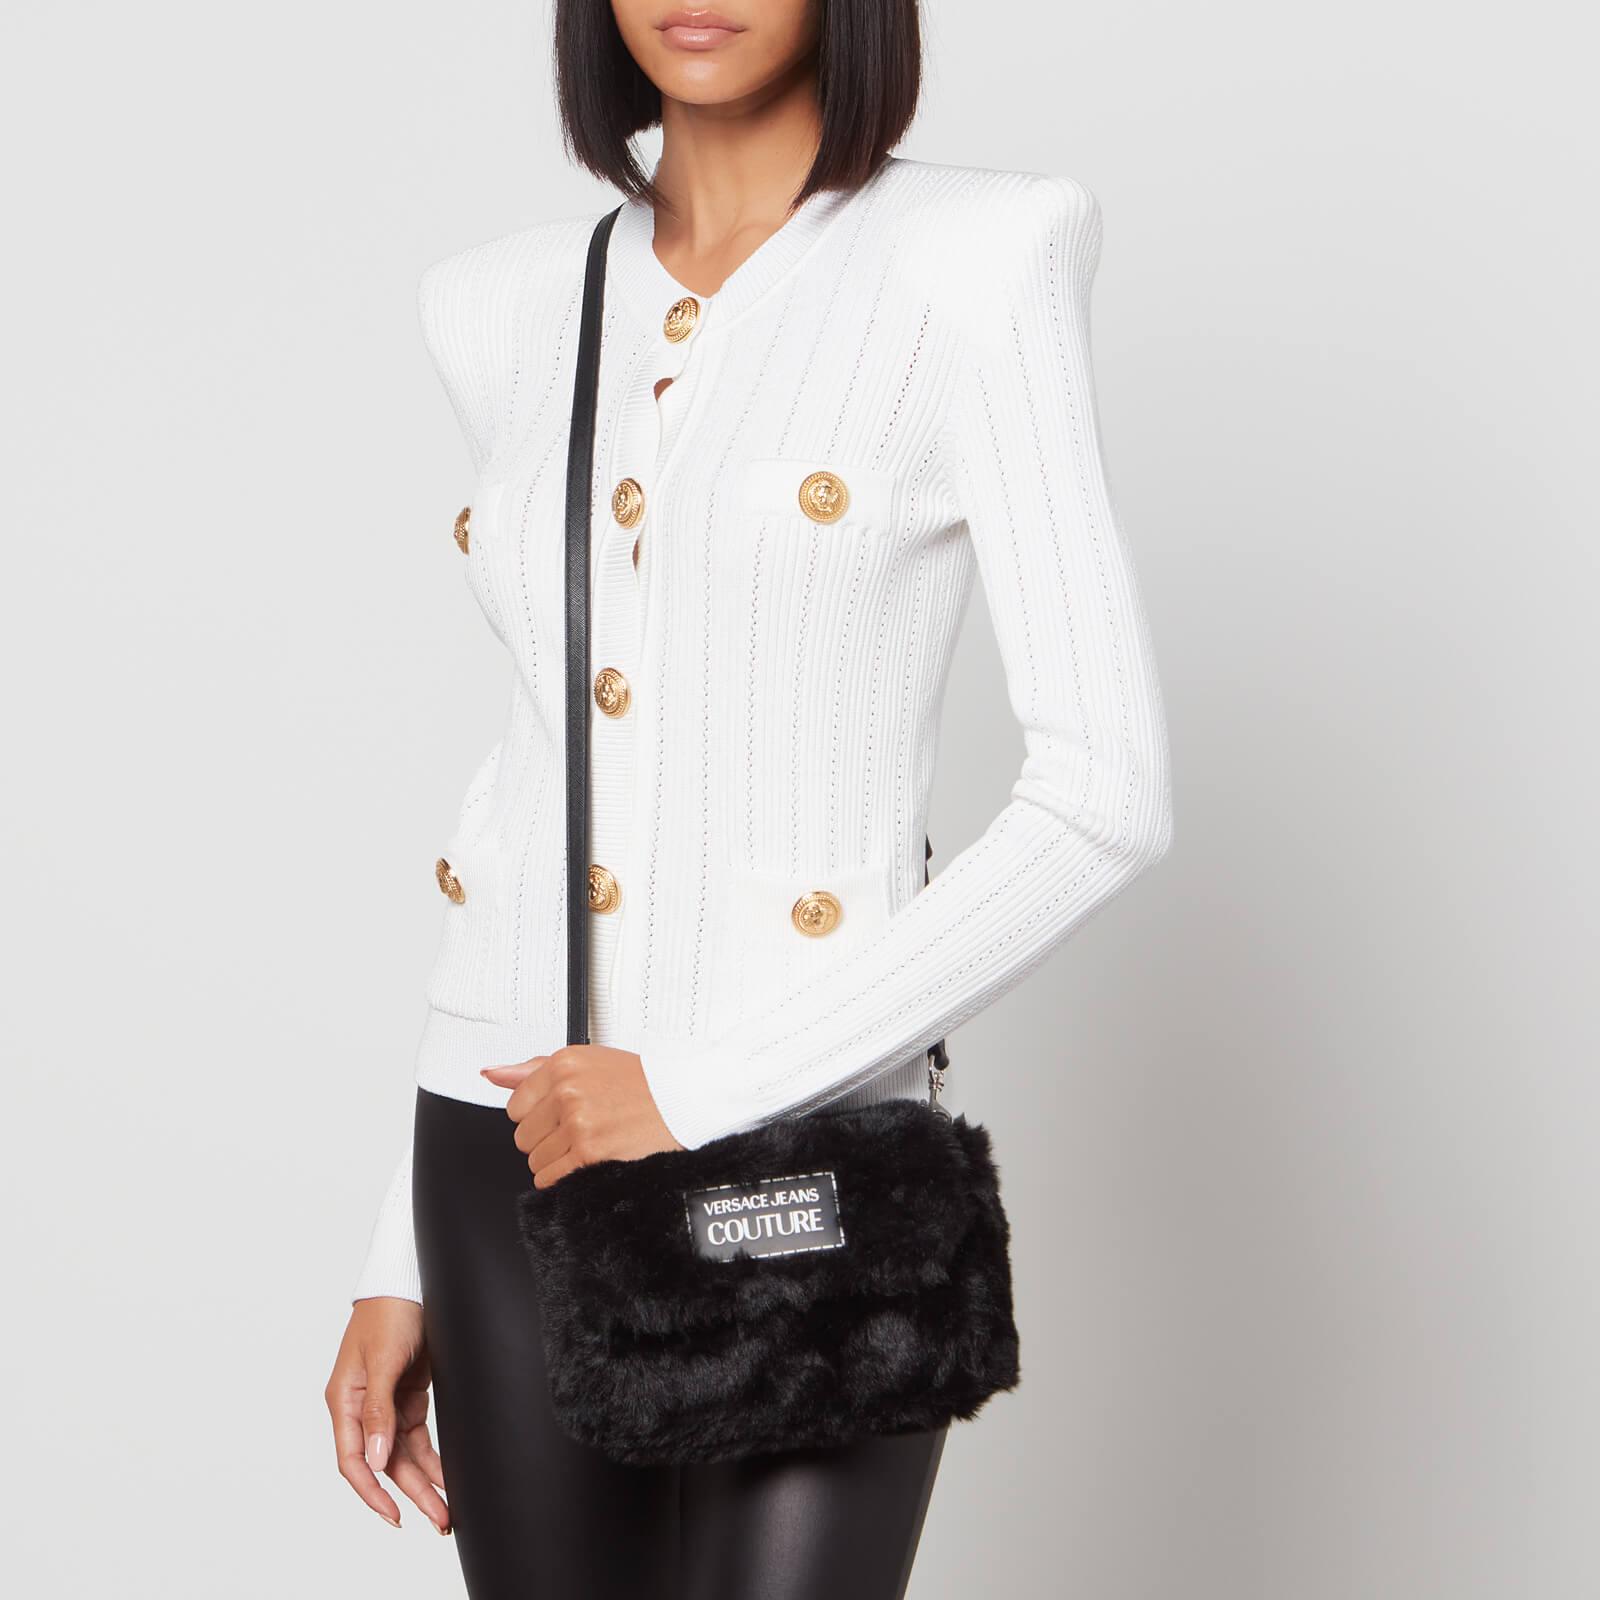 Versace Jeans Couture Faux Fur Shoulder Bag in Black | Lyst